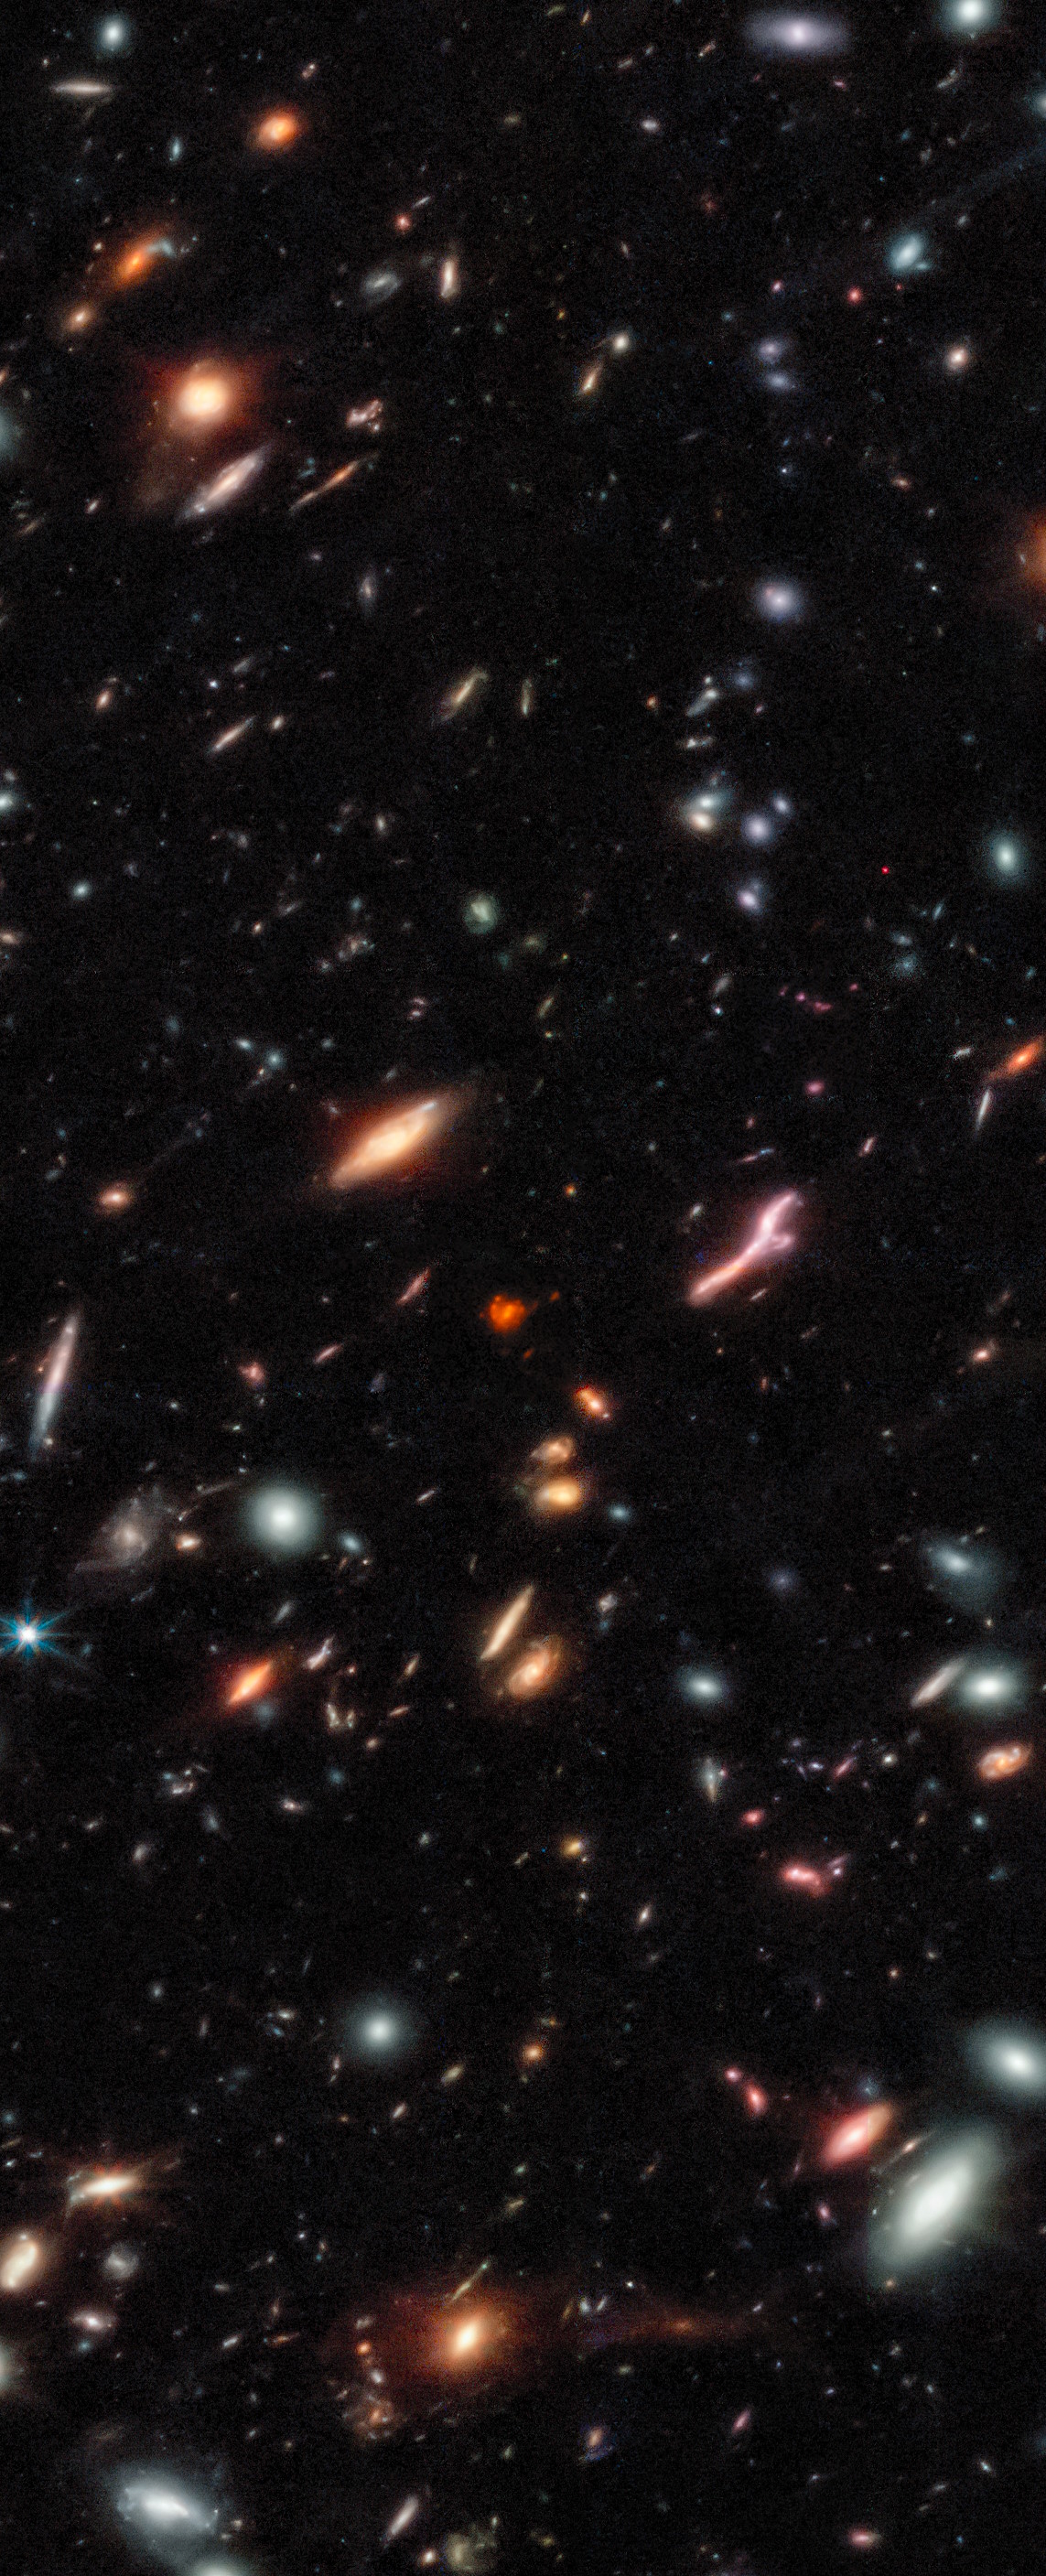 JWSTAbell 2744 galaxies